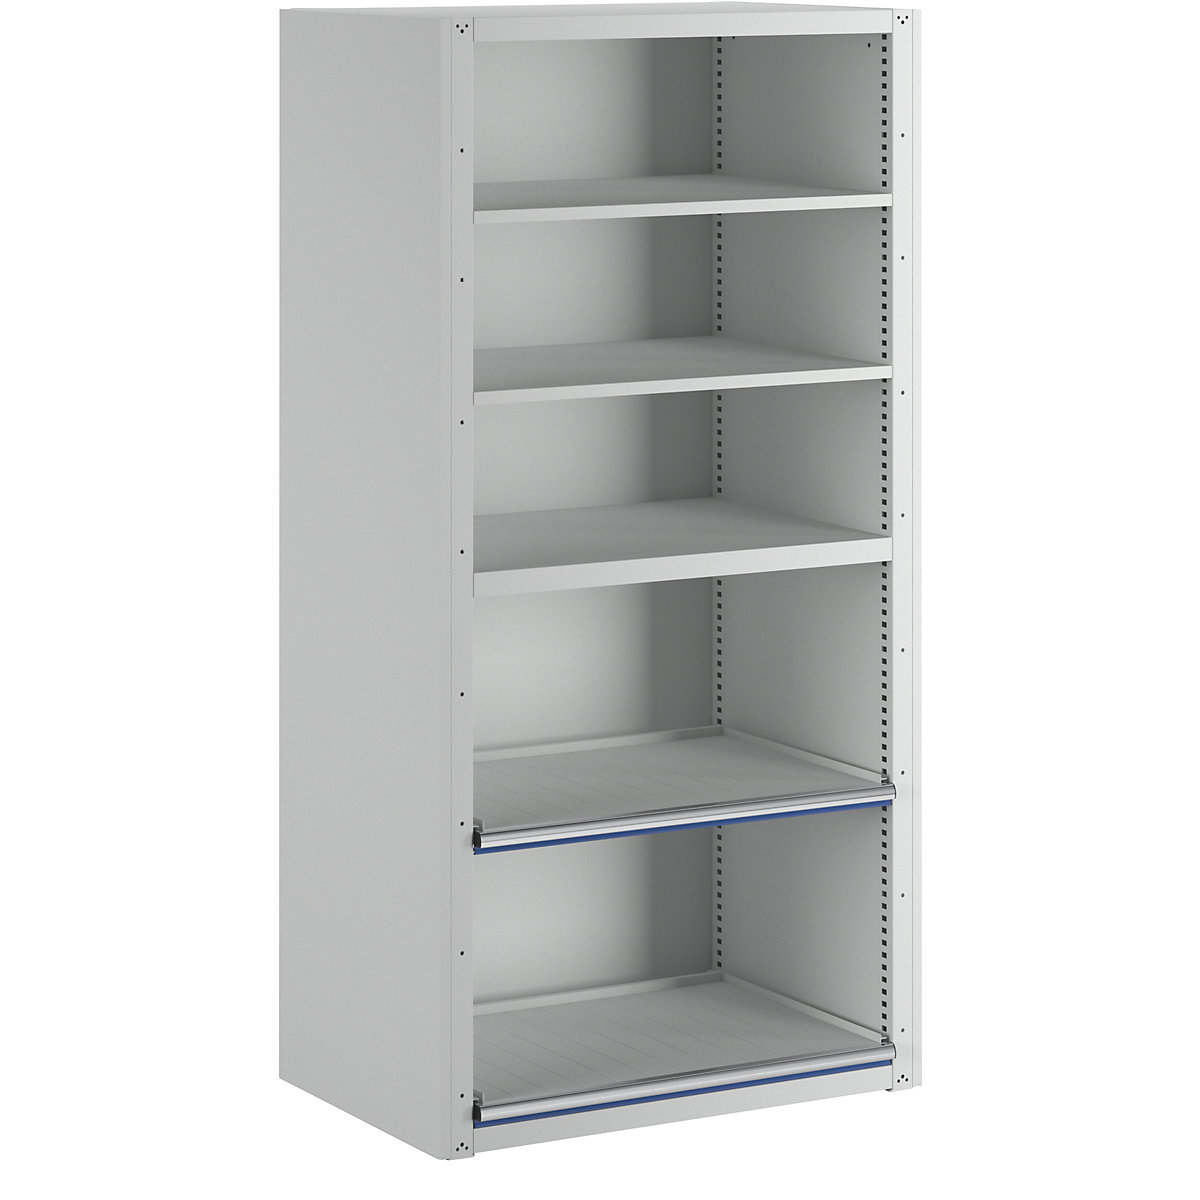 Drawer shelf unit – LISTA, 3 universal shelves, 2 adjustable shelves, 2 pull-out shelves, standard shelf unit-10